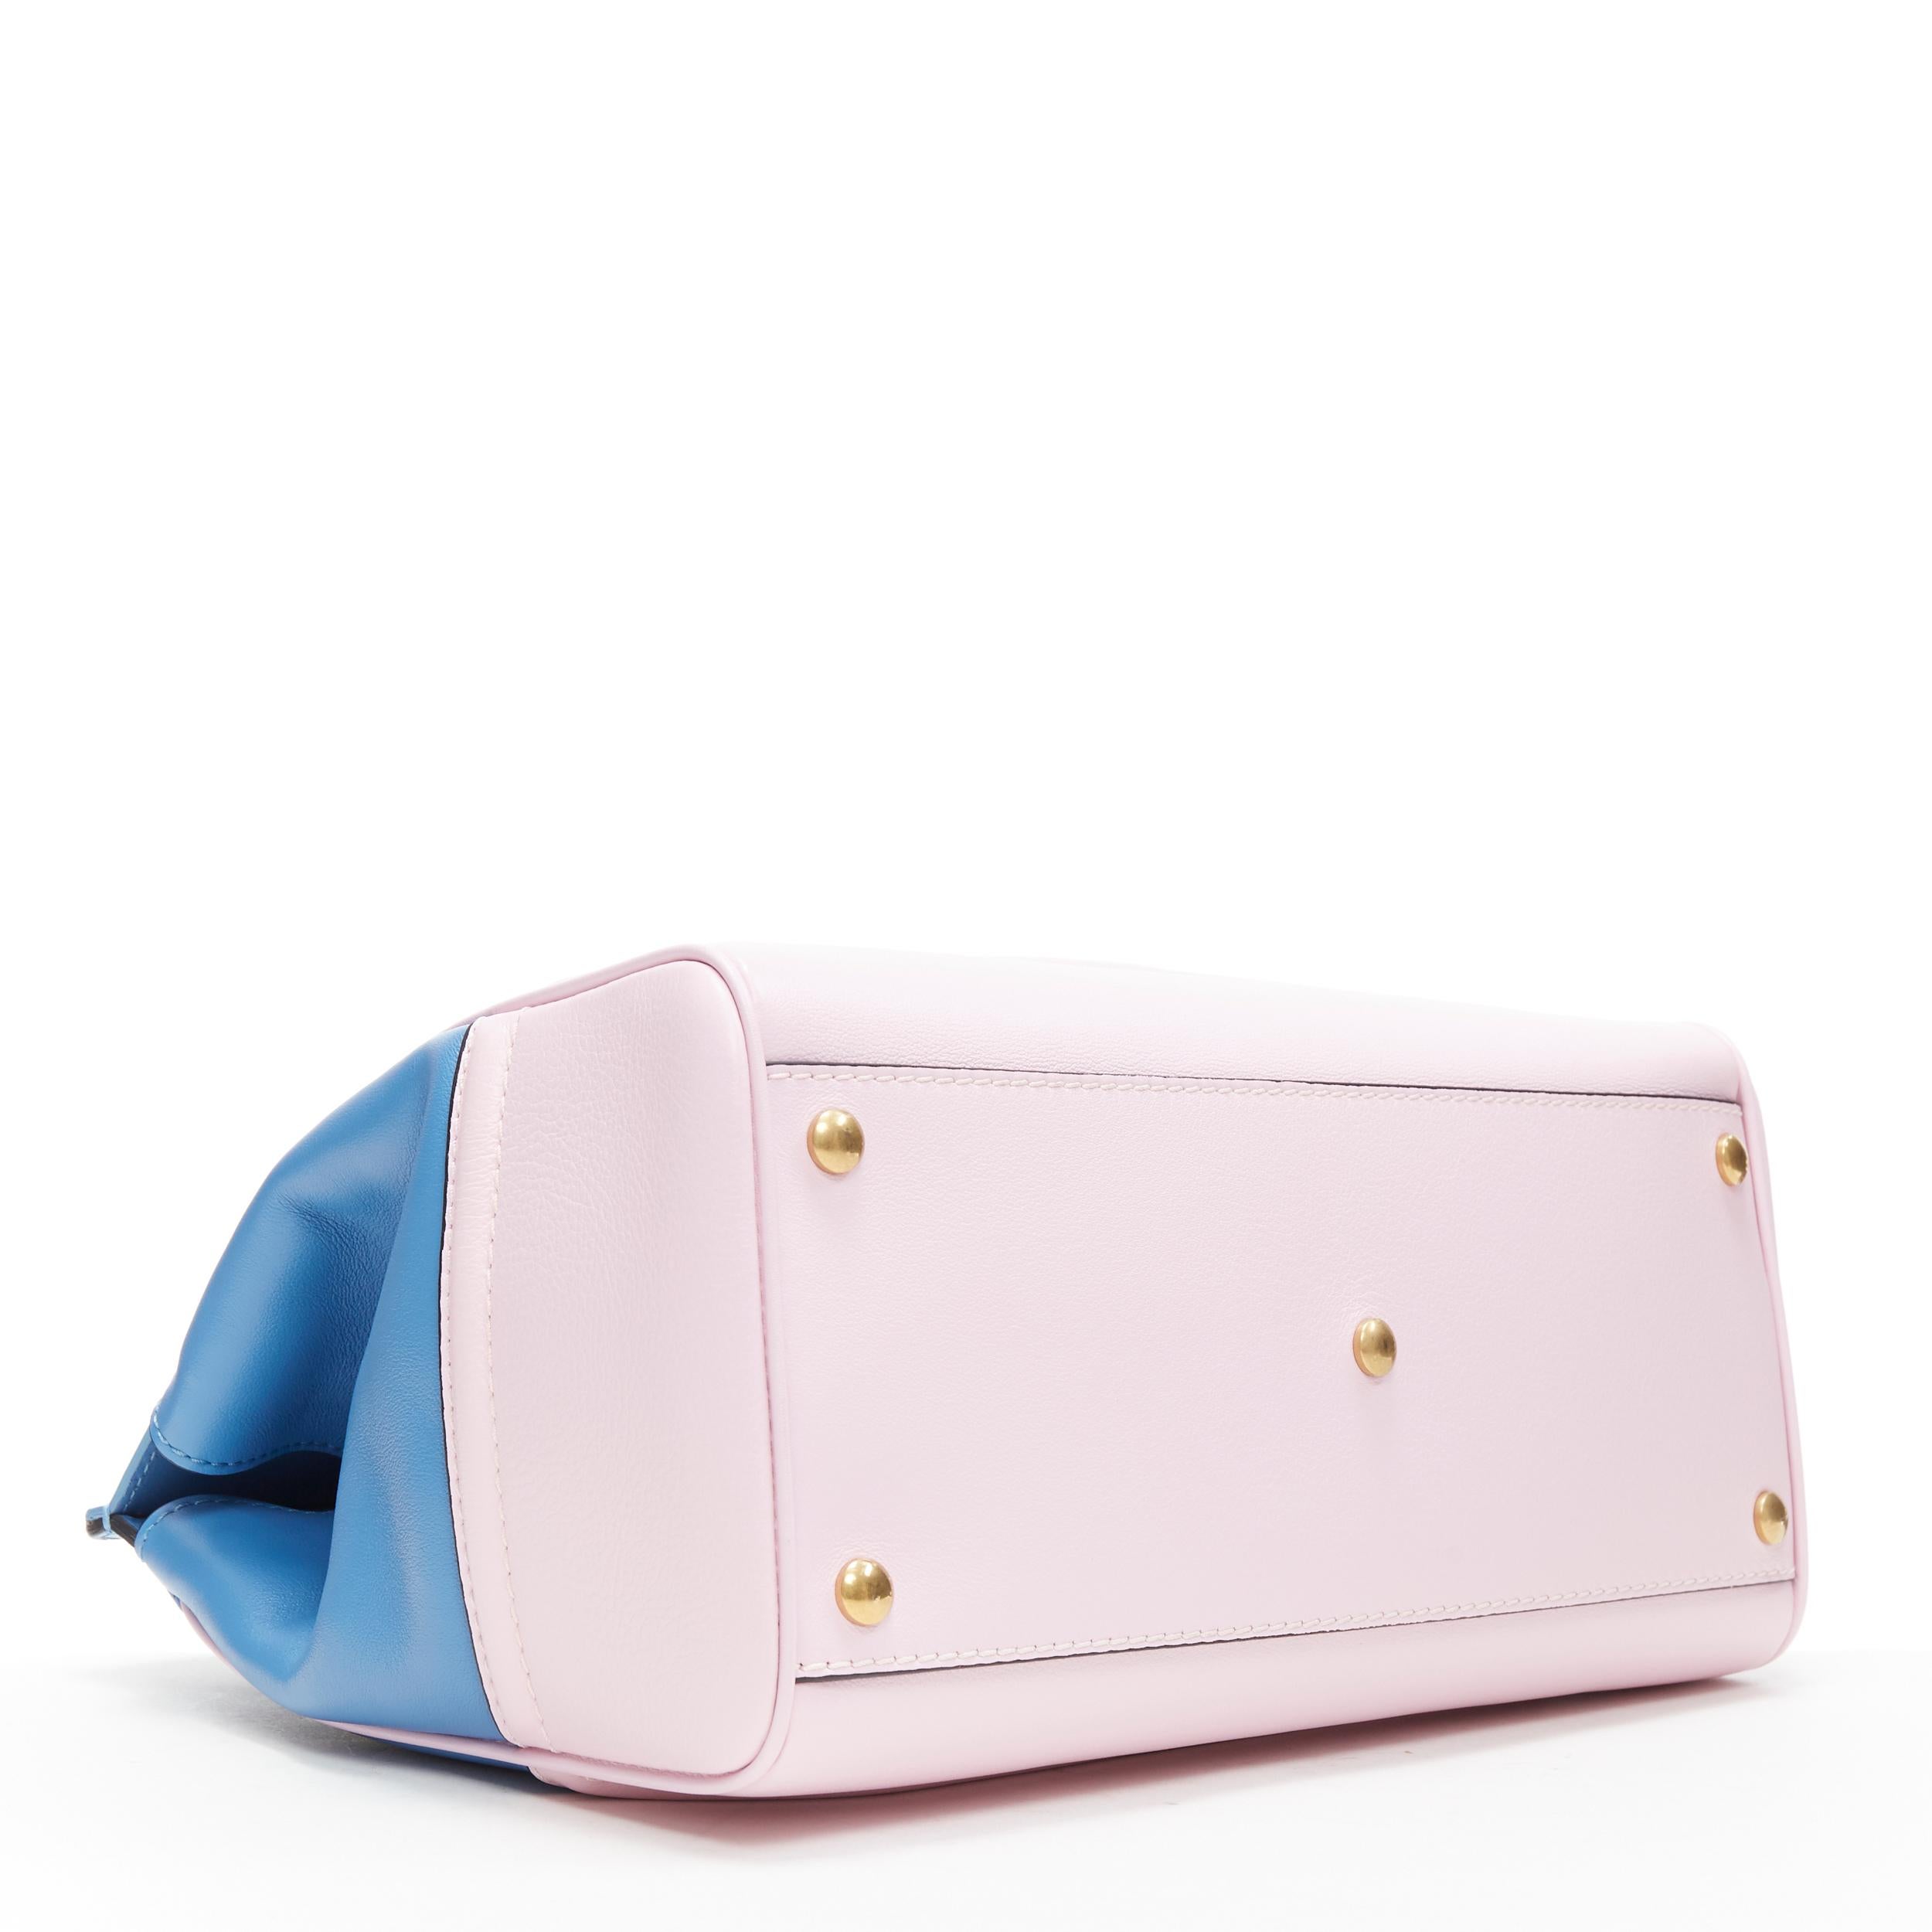 Women's new VERSACE Palazzo Empire Medium pastel blue pink colorblocked Medusa bag rare